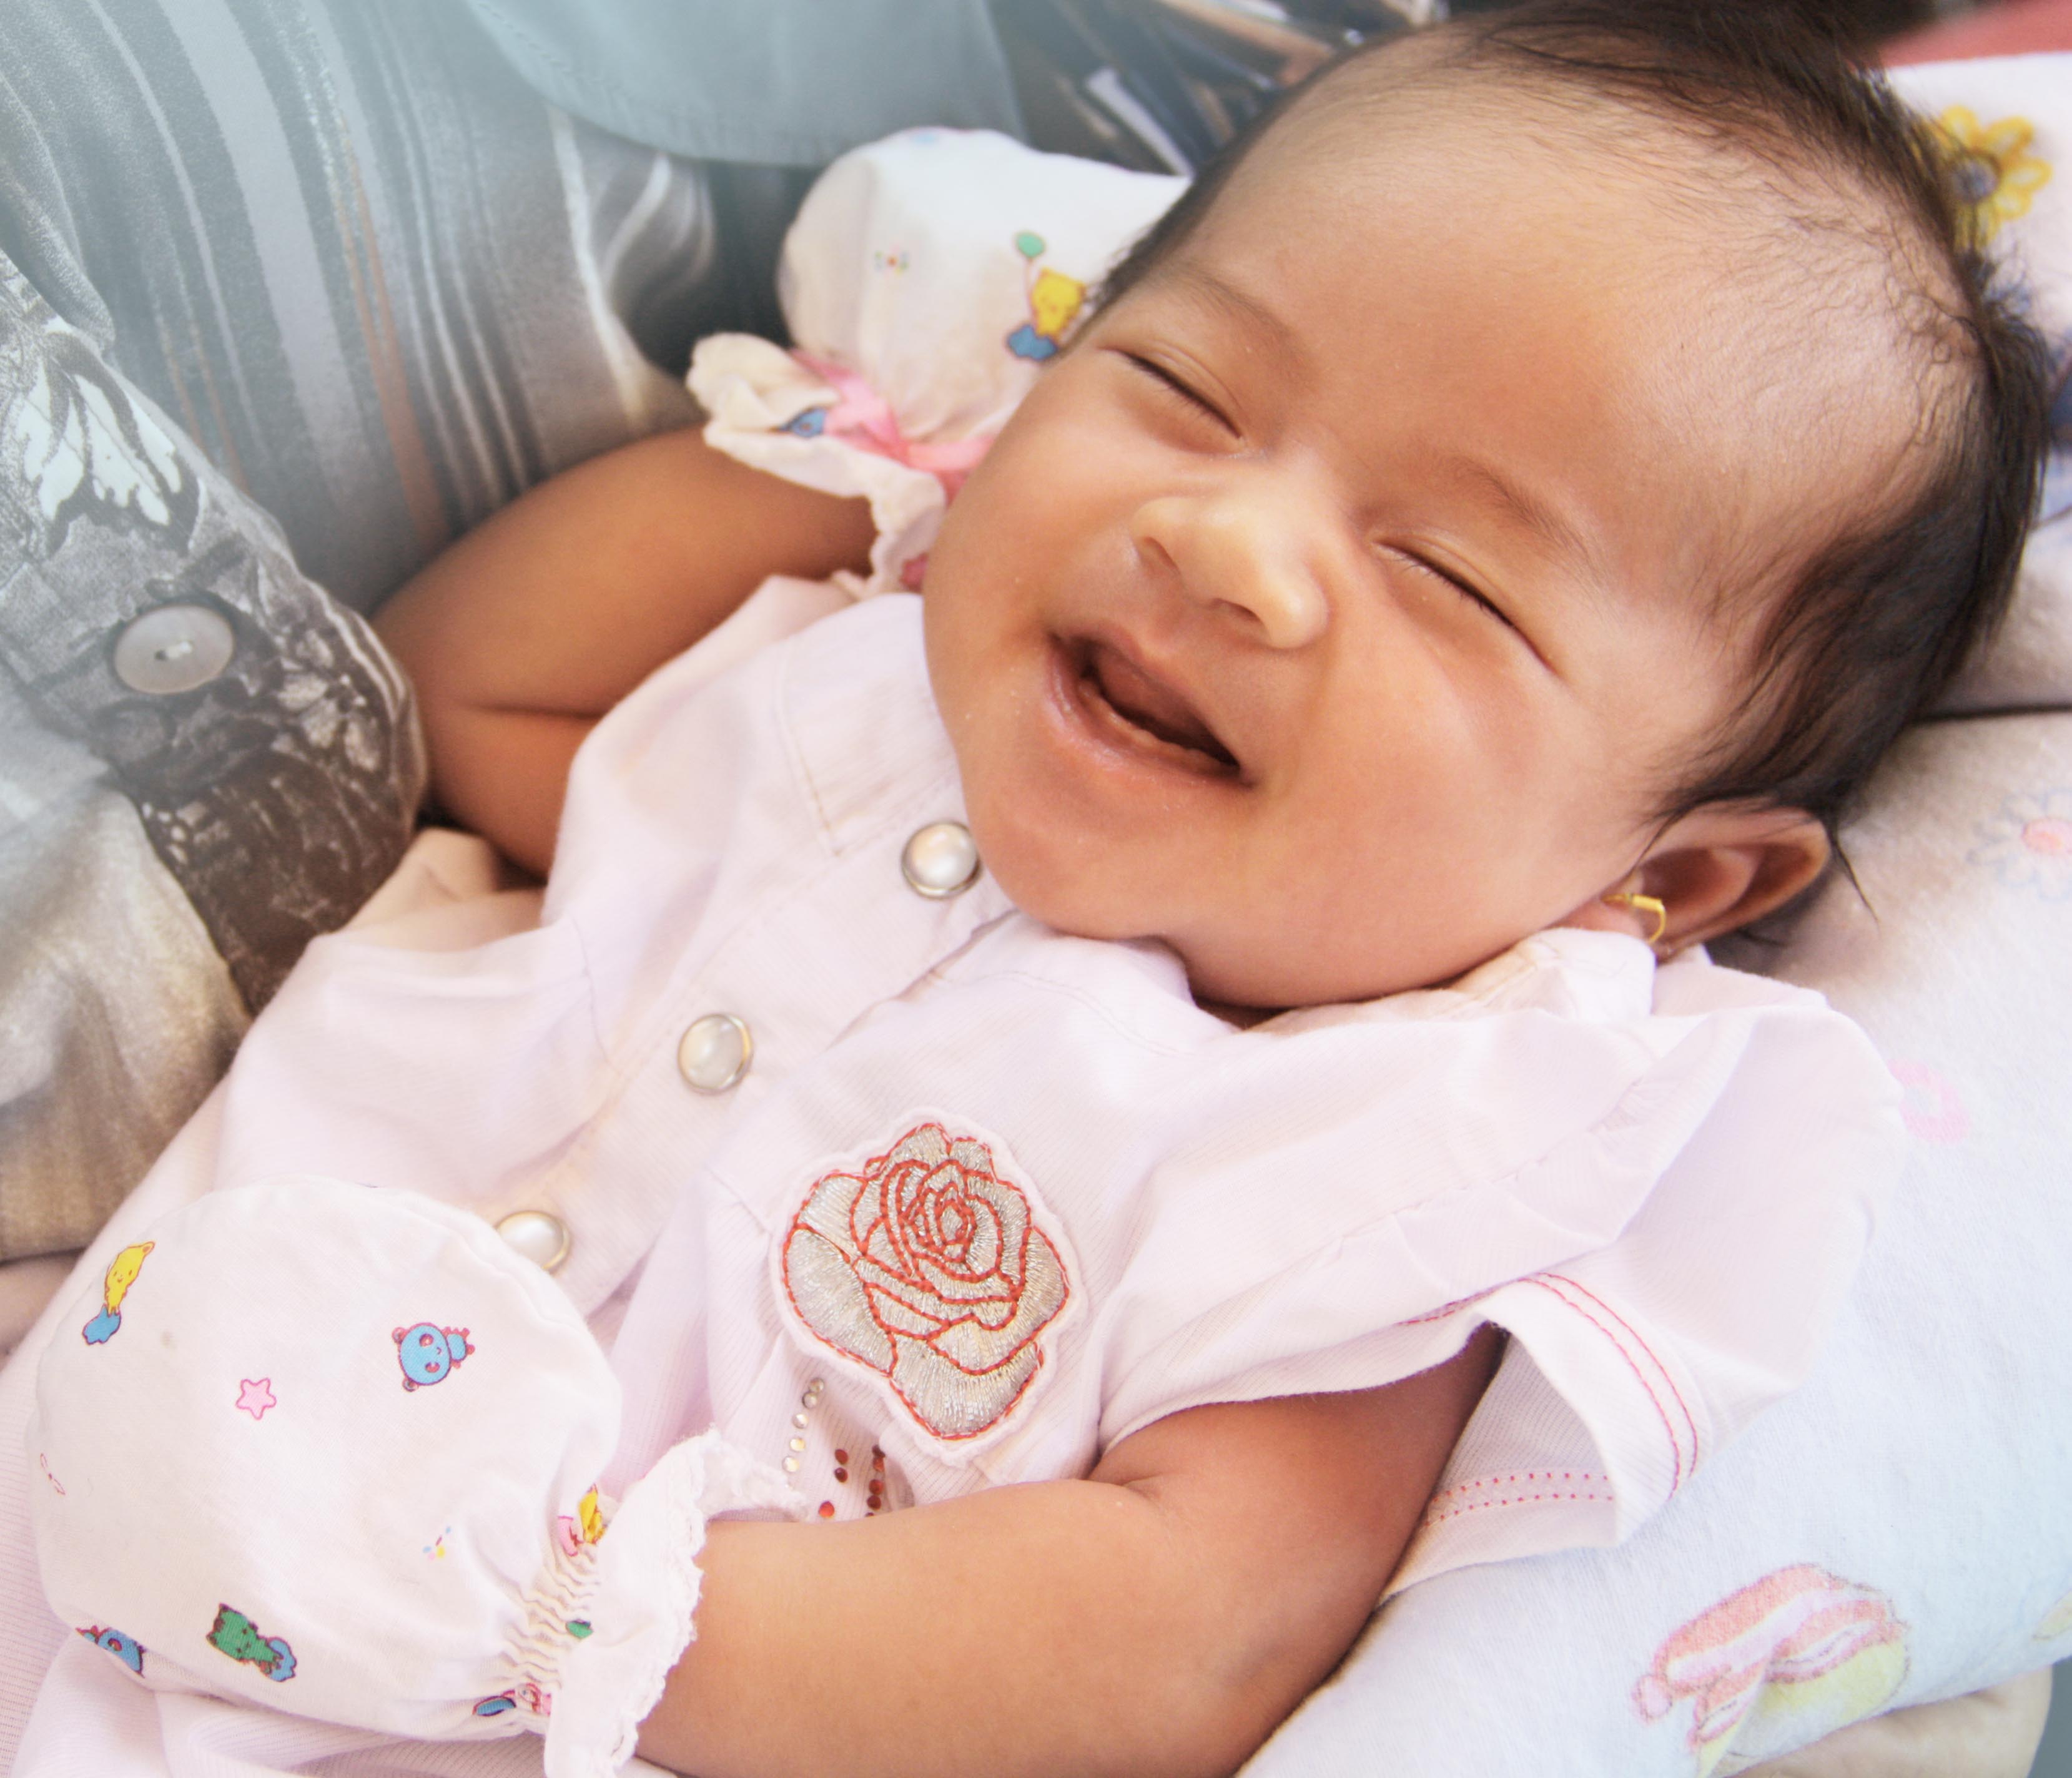 Foto Anak Bayi Yang Lucu Terbaru Display Picture Update